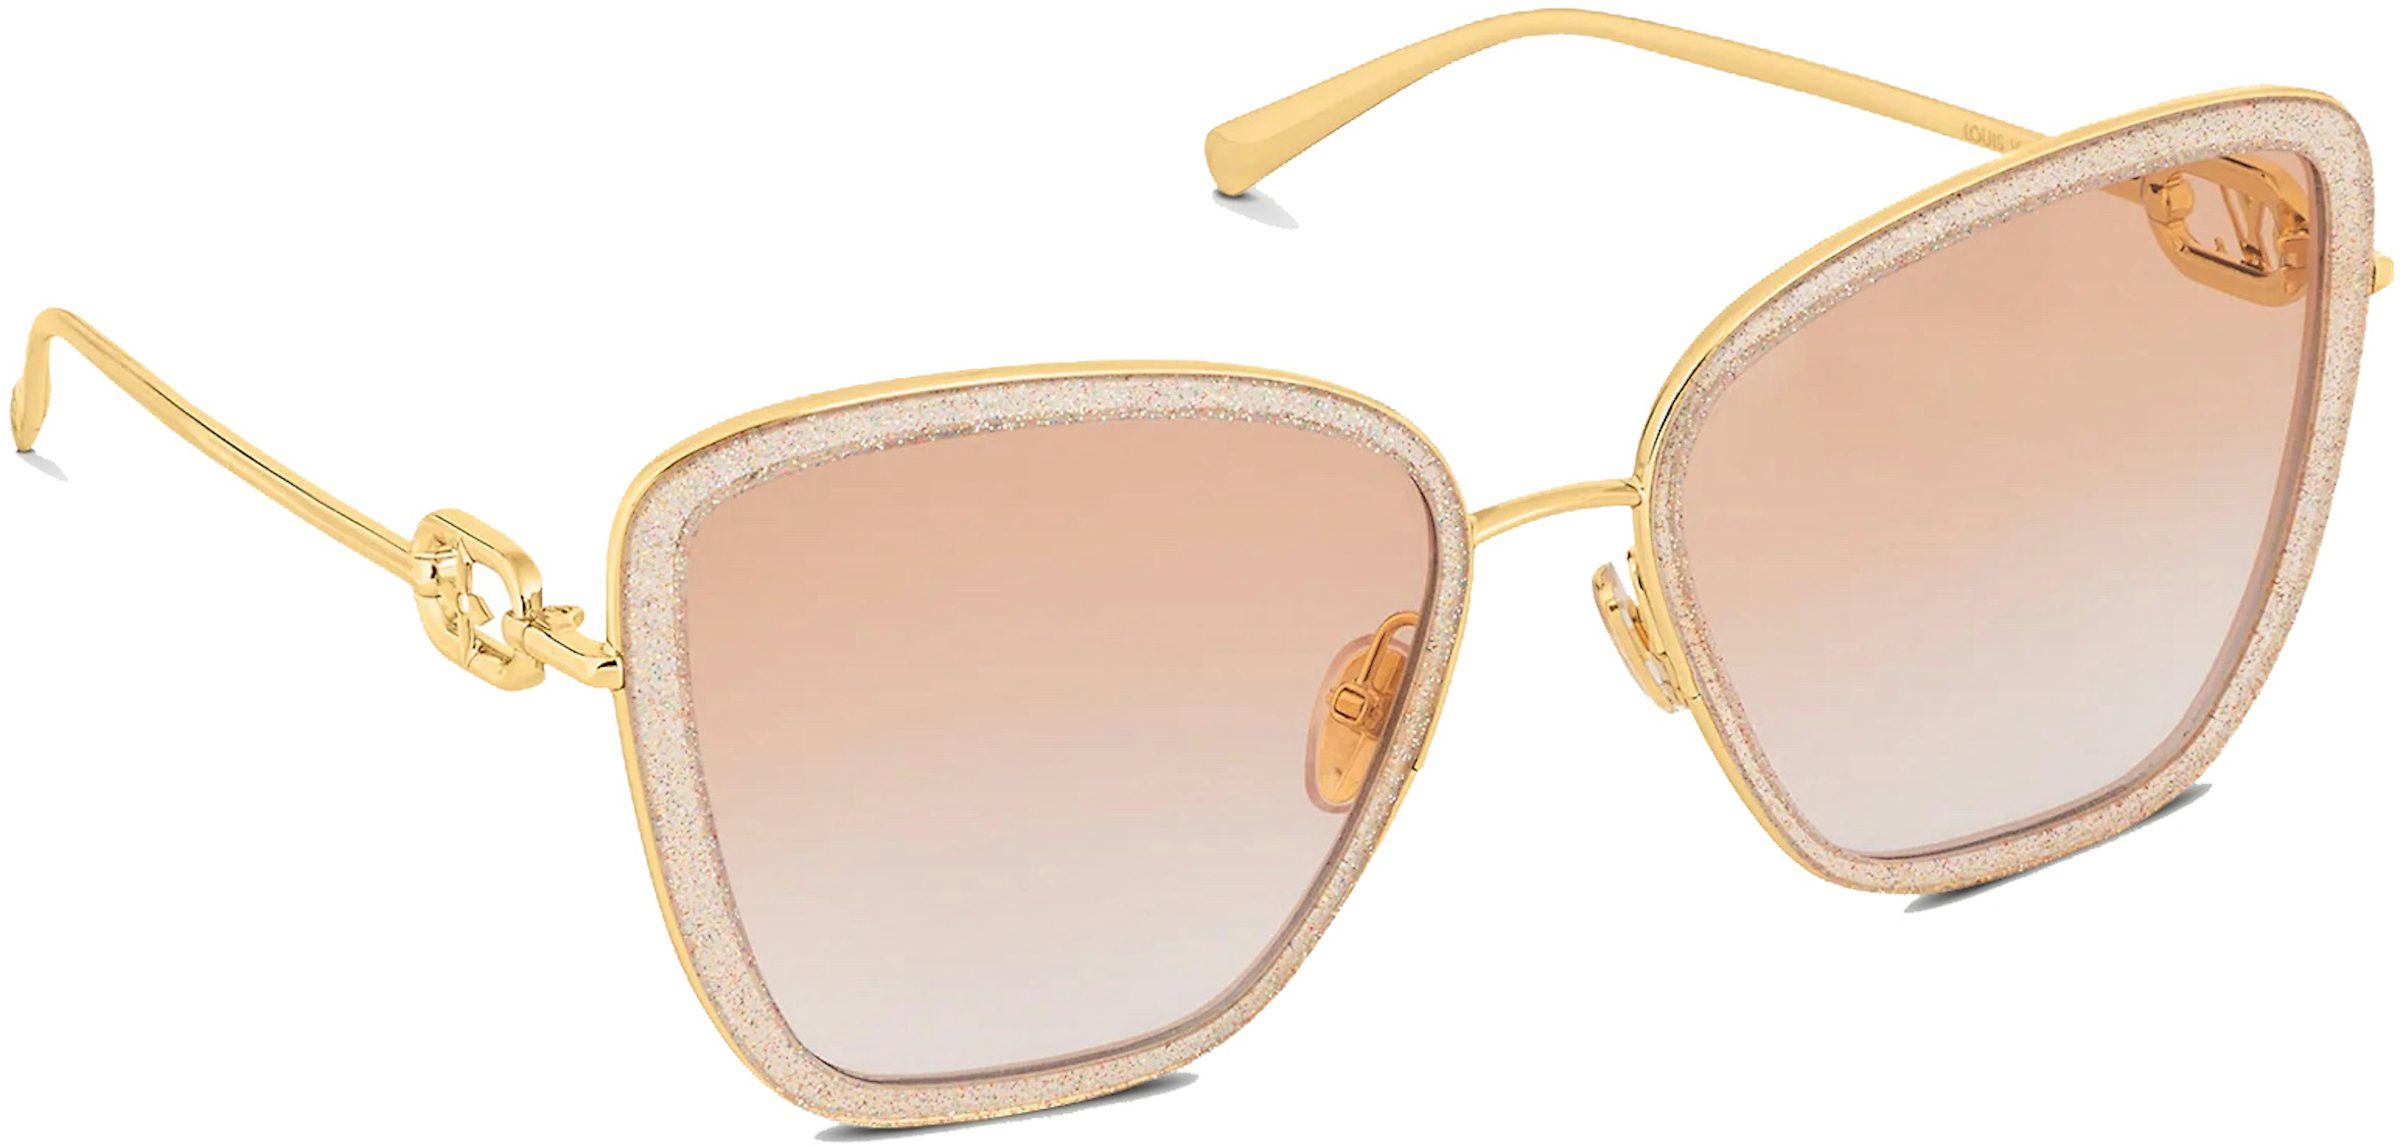 Louis Vuitton LV Link PM Cat Eye Sunglasses Black Acetate. Size W